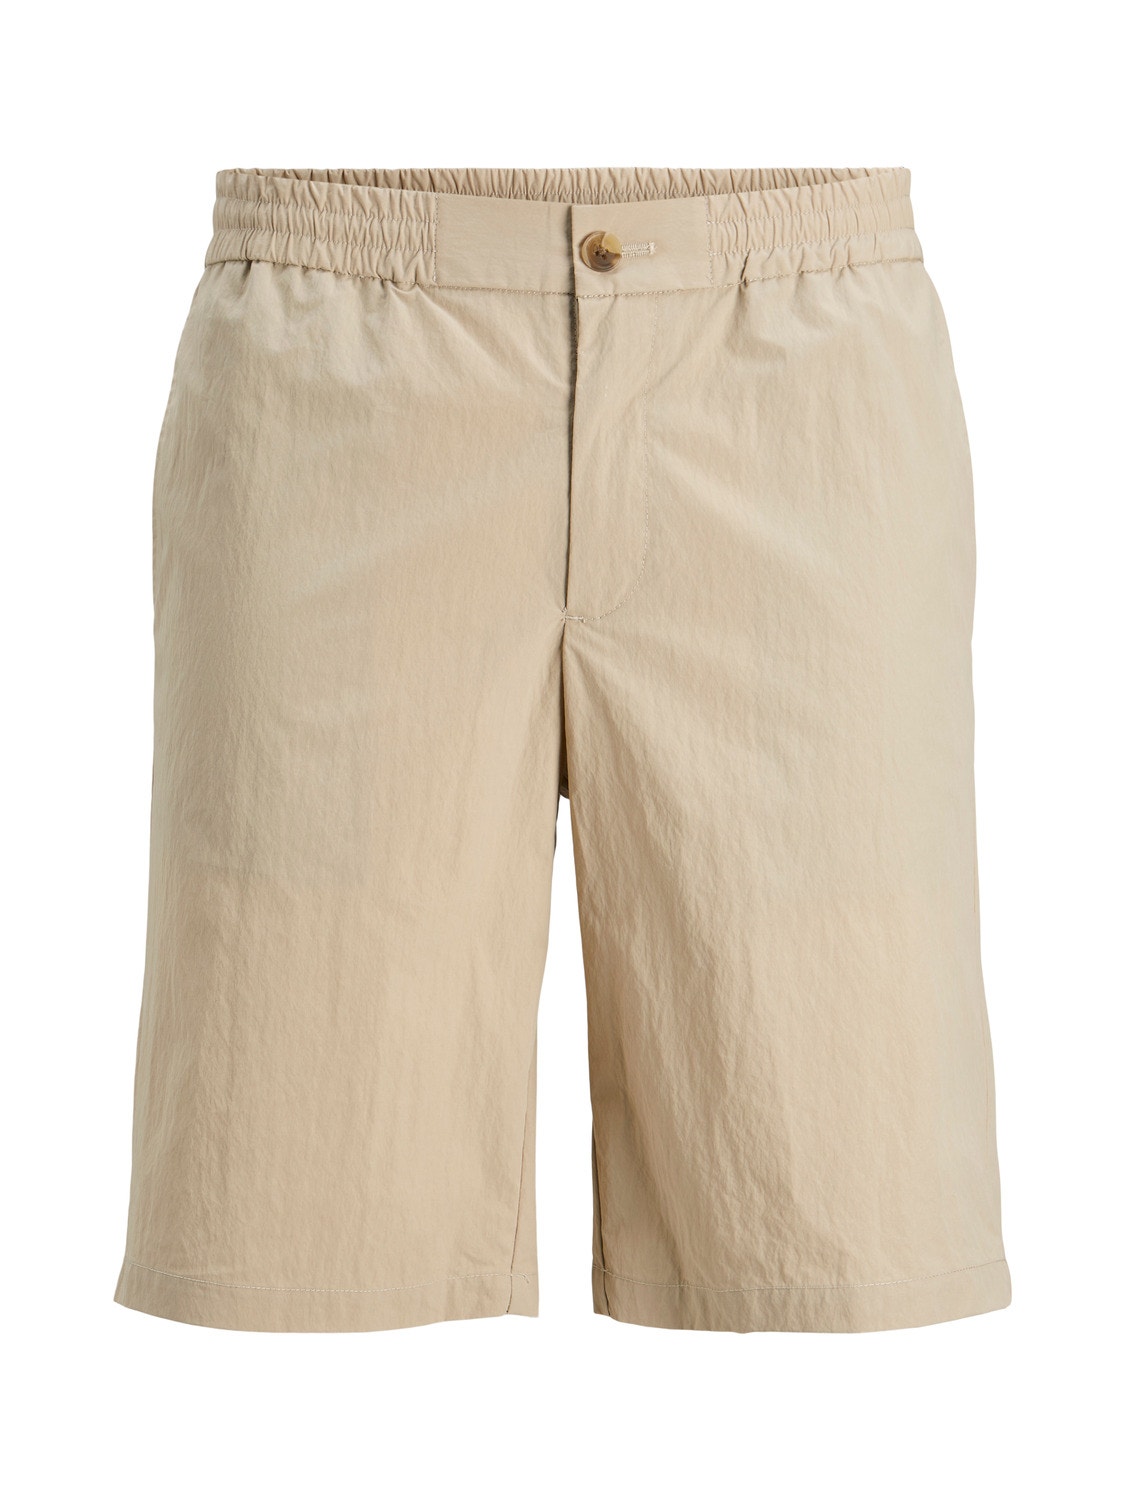 Jack & Jones Slim Fit Shorts -Curds & Whey - 12208556